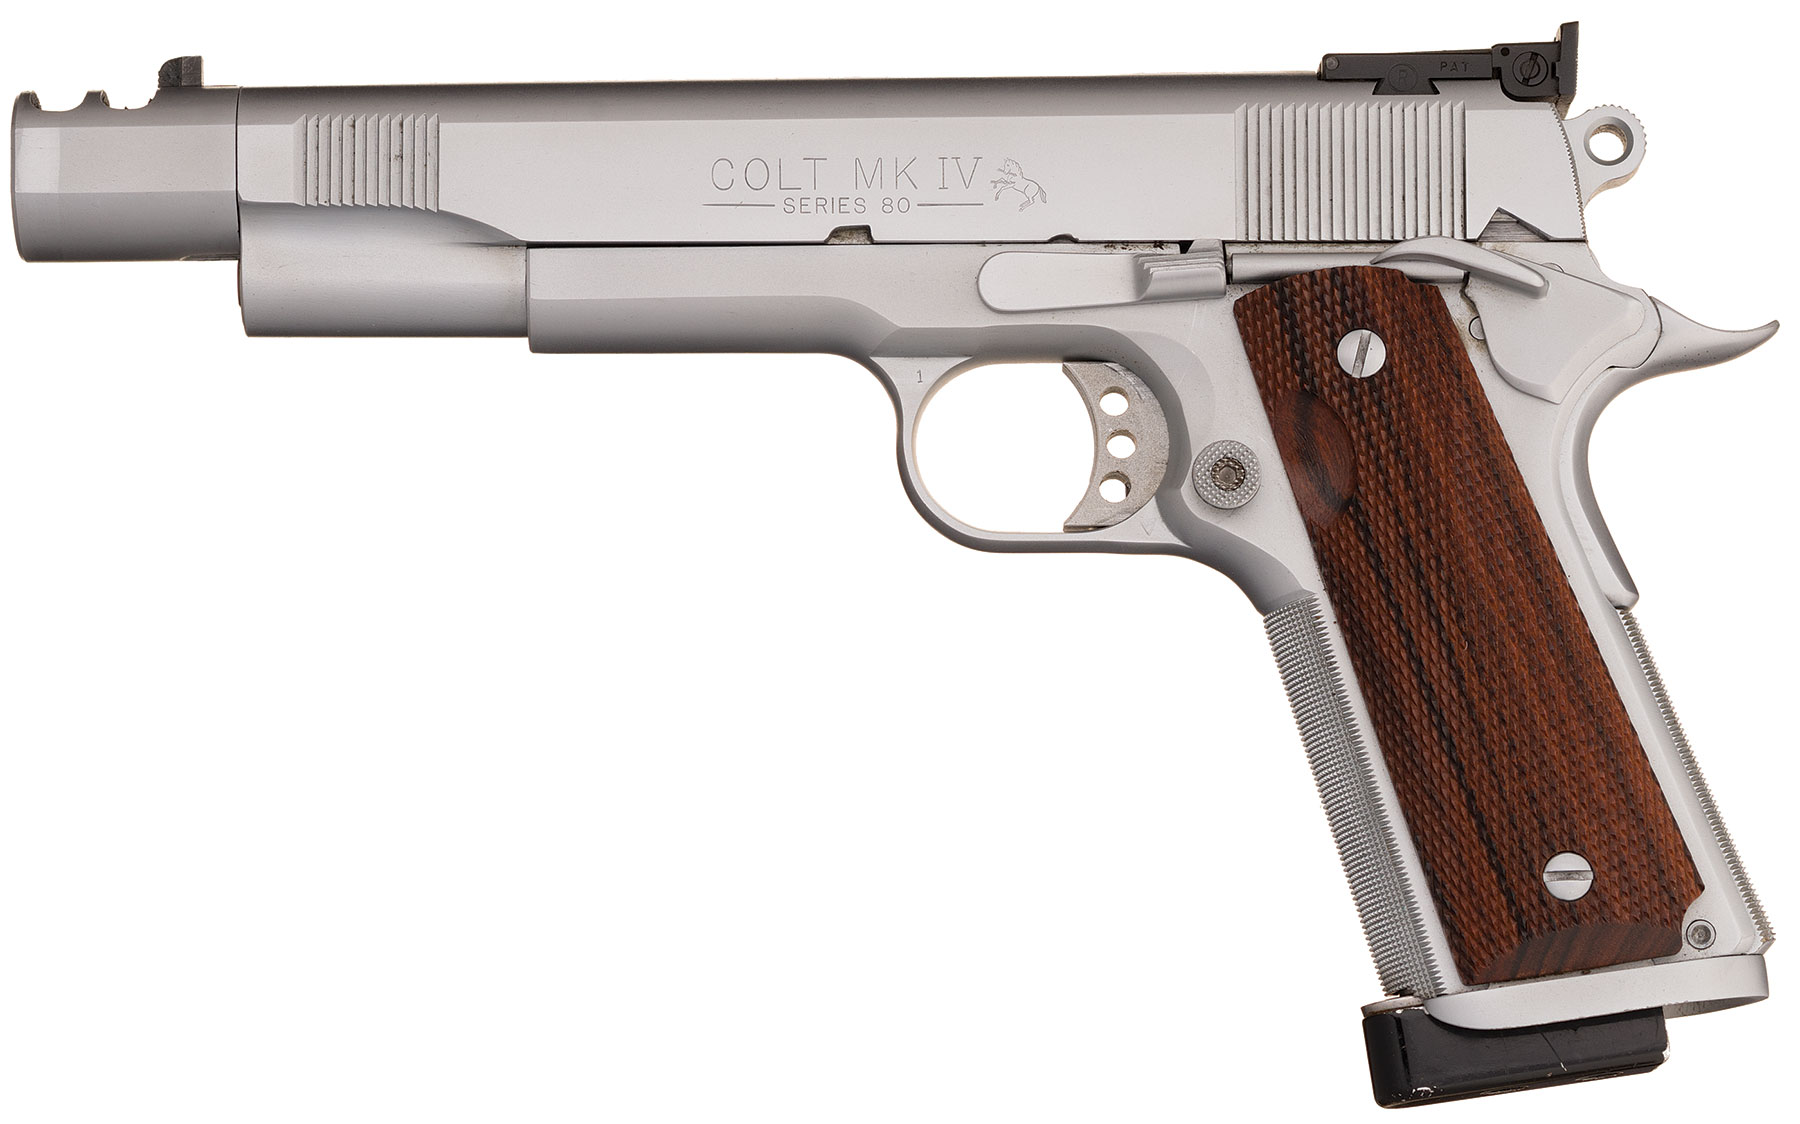 IV Series 80 Government Model Pistol.